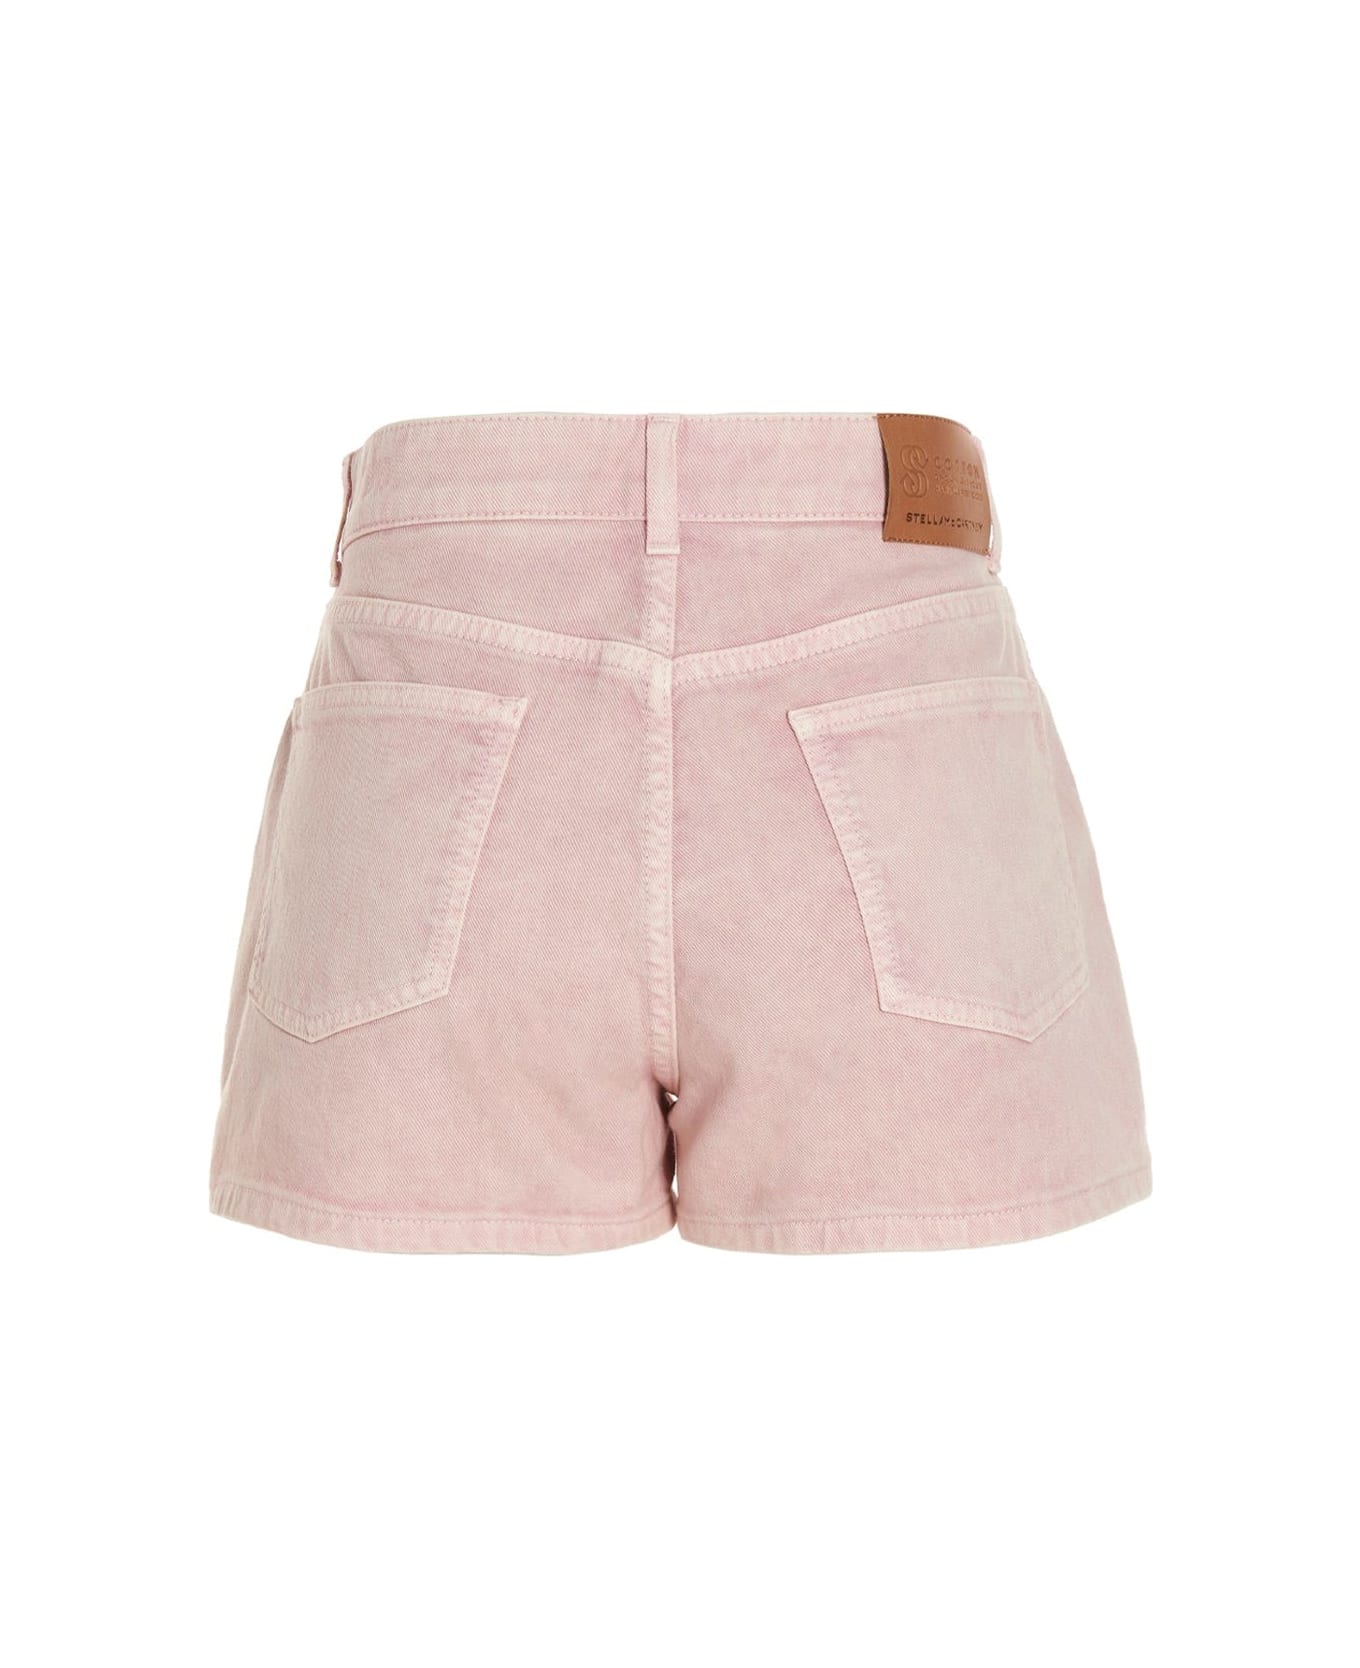 Stella McCartney Denim Shorts - Pink